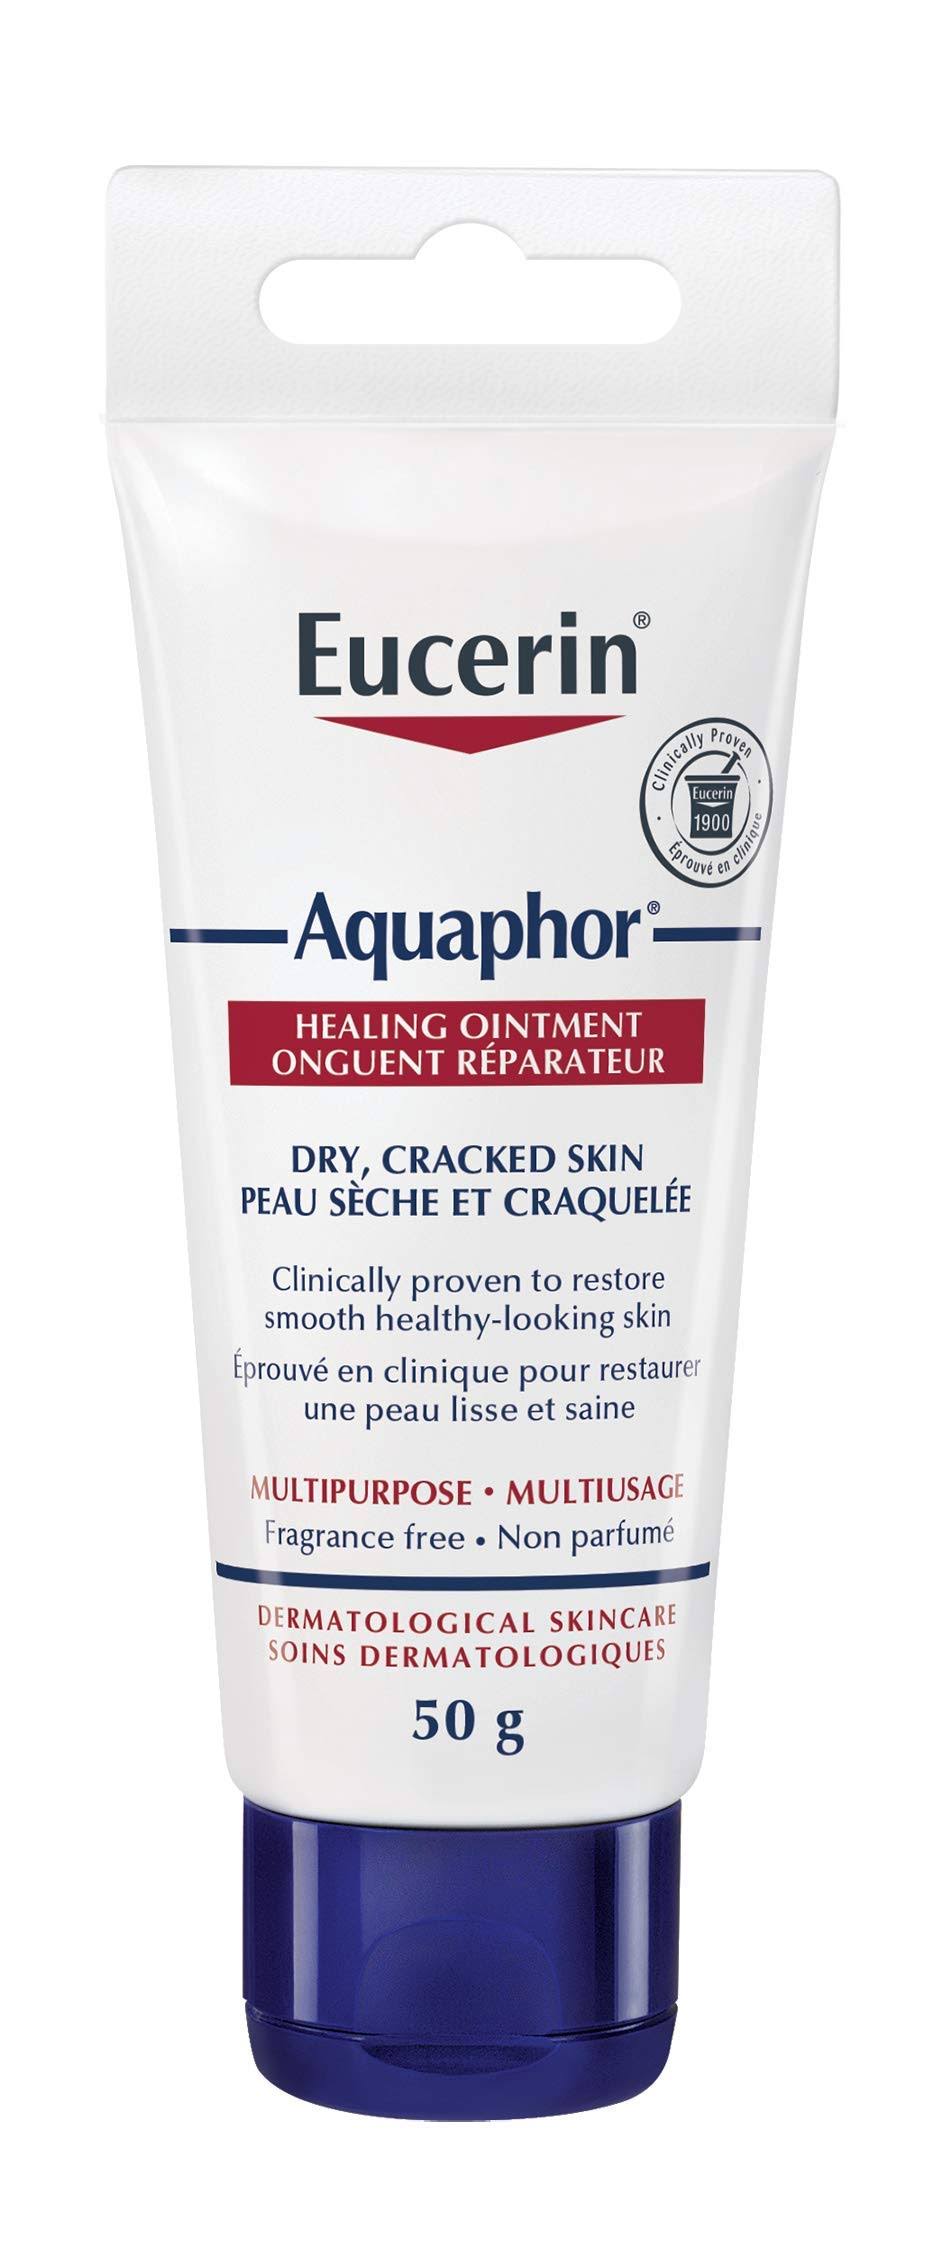 Eucerin Aquaphor Healing Ointment - 50g